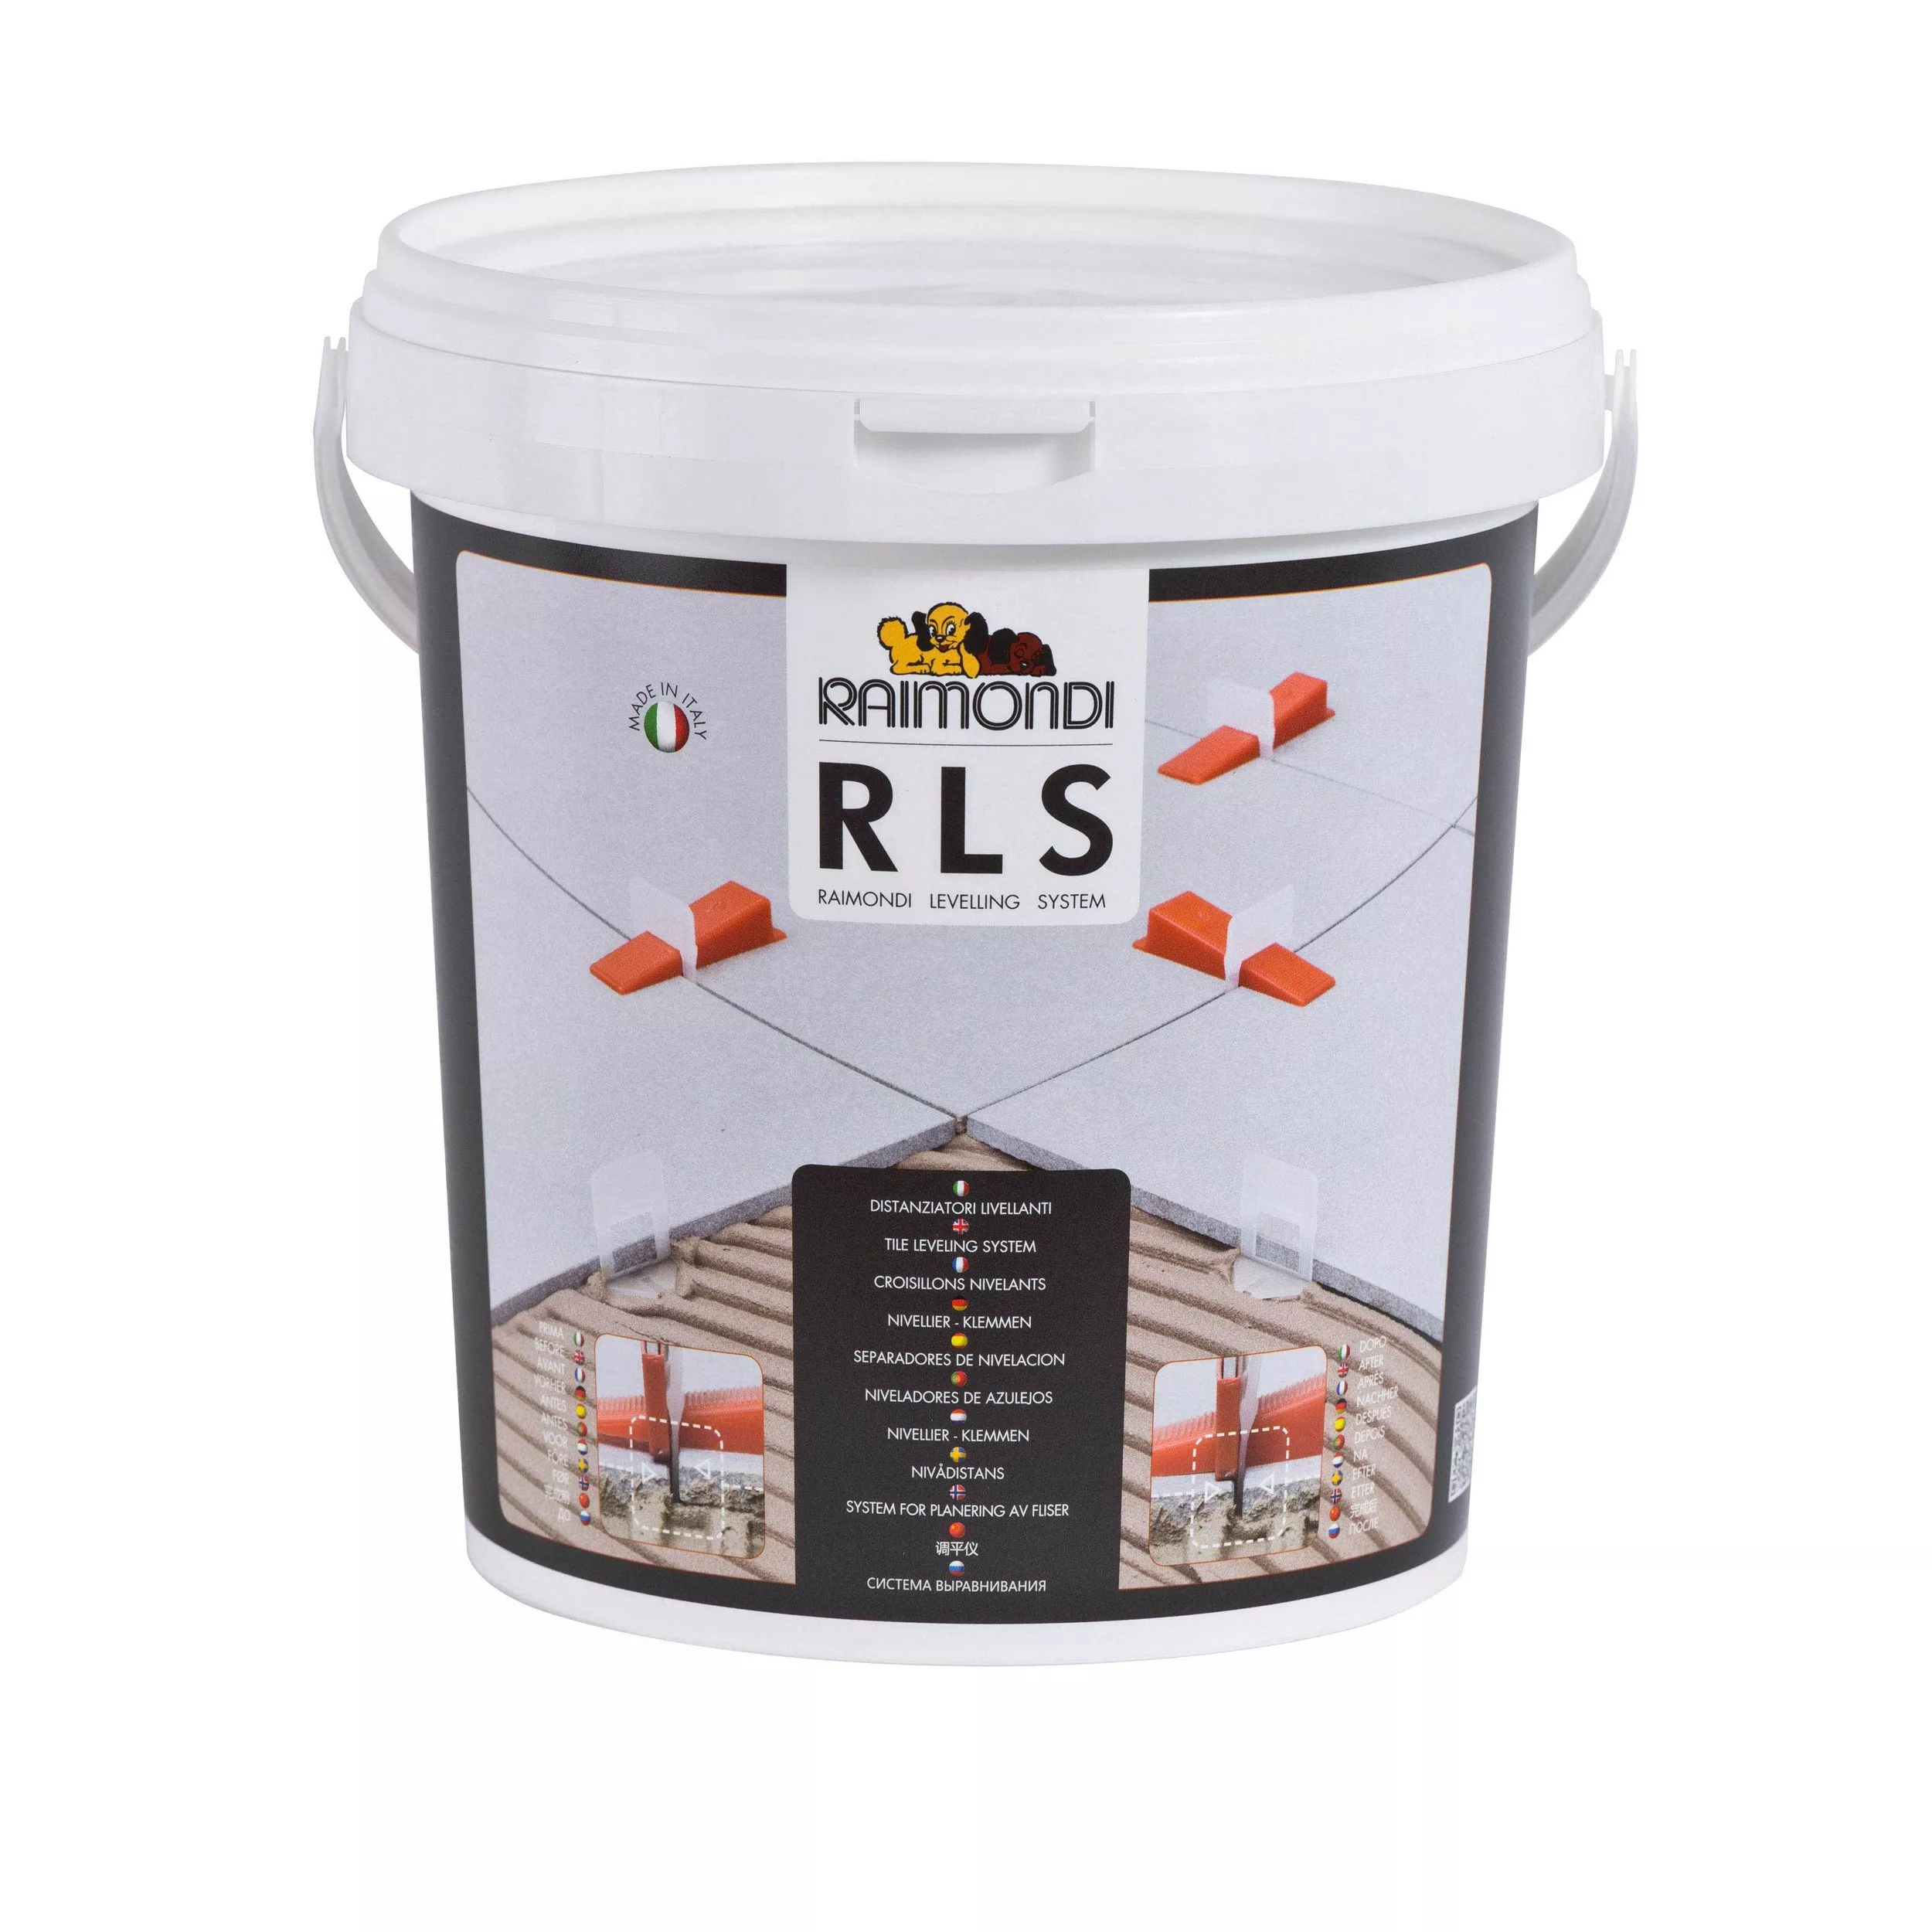 Raimondi RLS Level System Kit